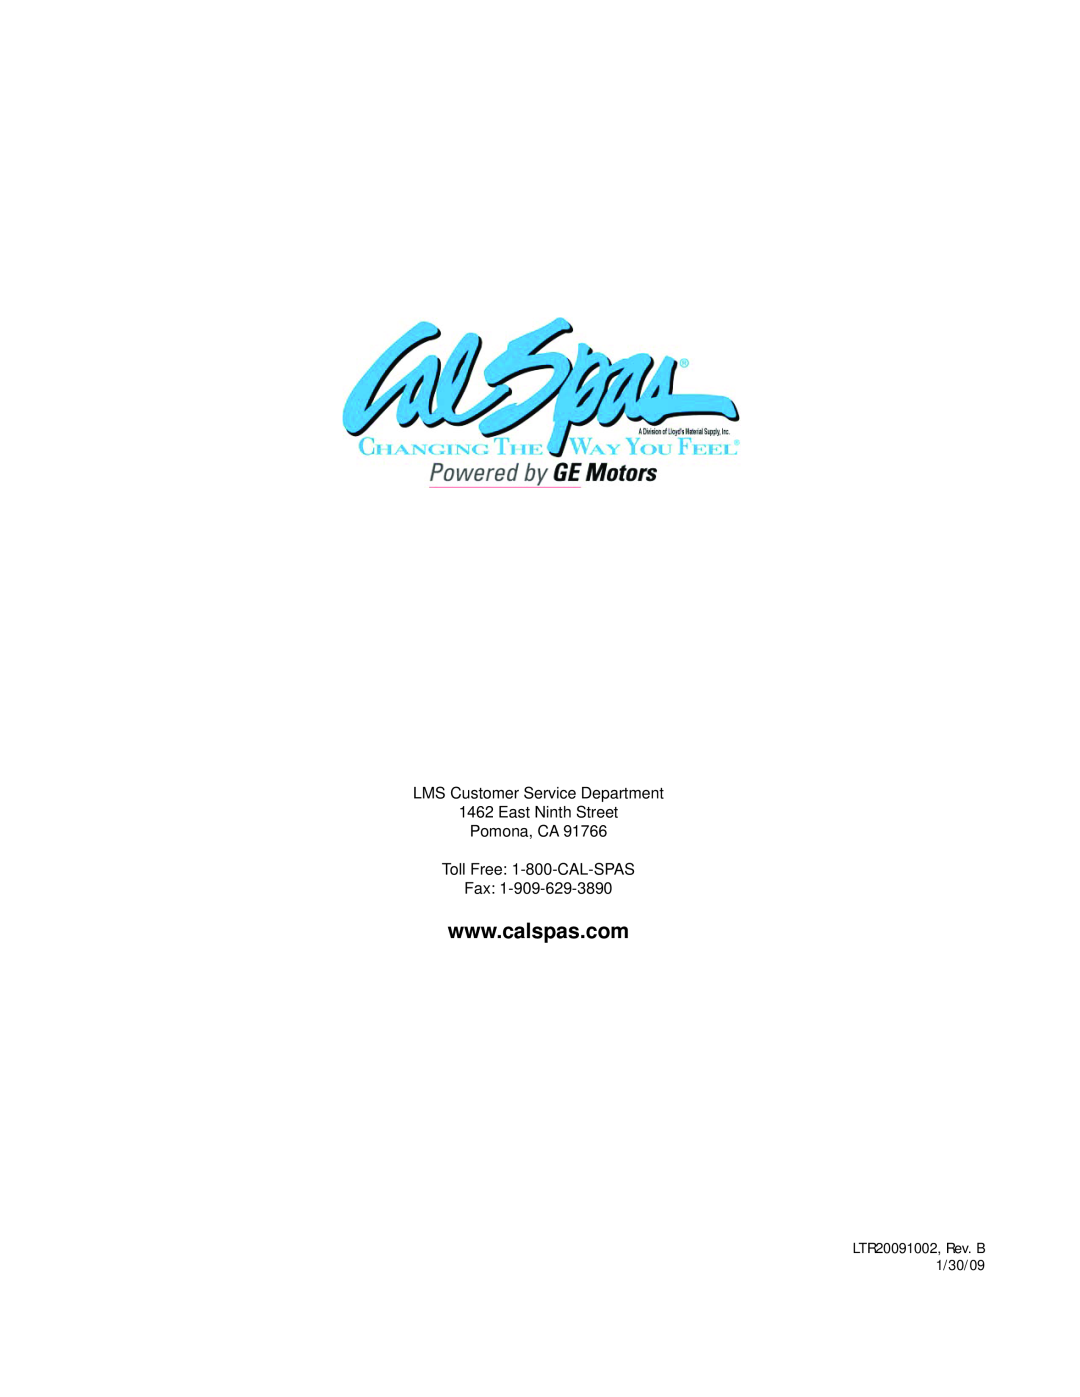 Cal Spas Inground Spas manual LMS Customer Service Department, East Ninth Street Pomona, CA, Toll Free 1-800-CAL-SPAS Fax 